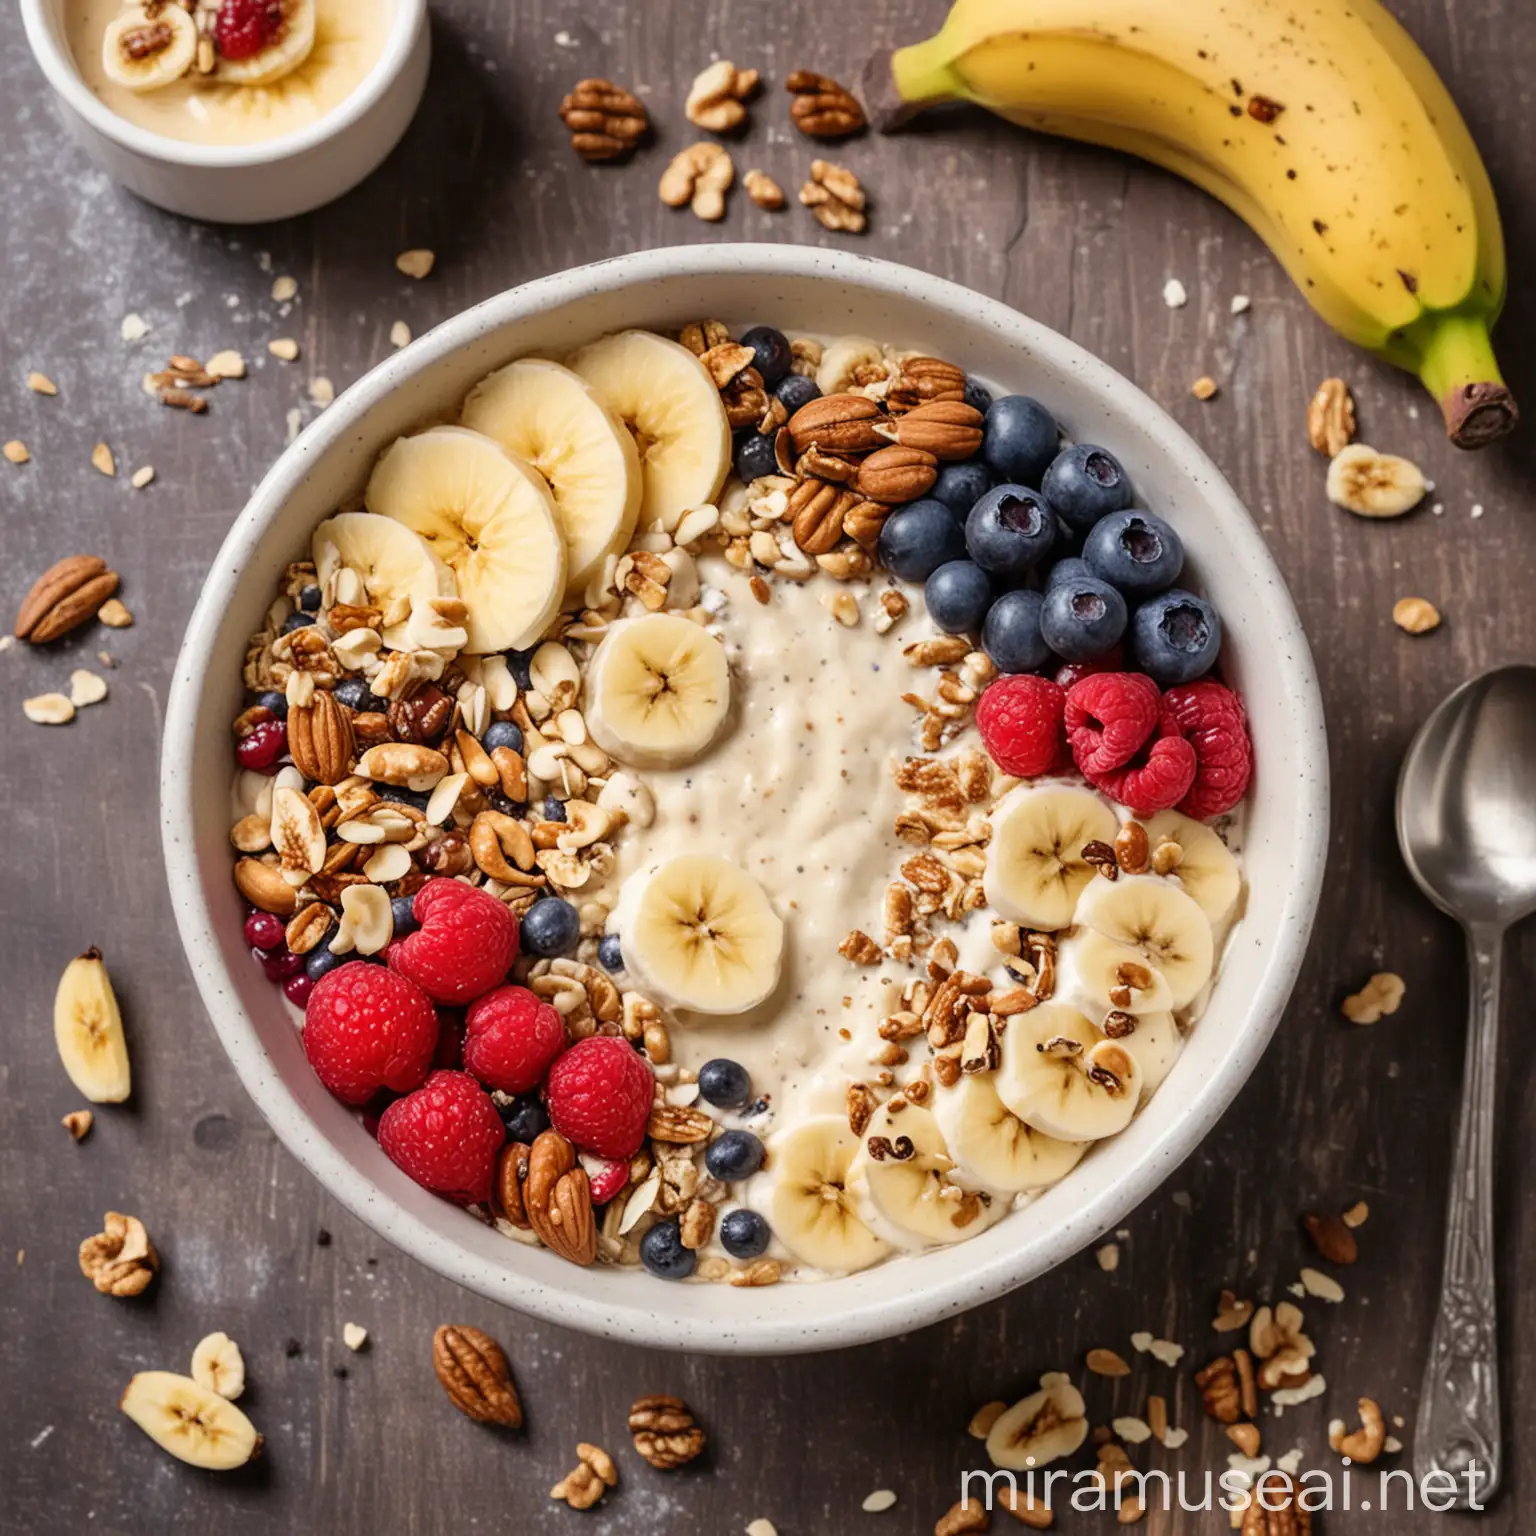 Greek Yogurt Smoothie Bowl
with banana, berries, honey and nuts